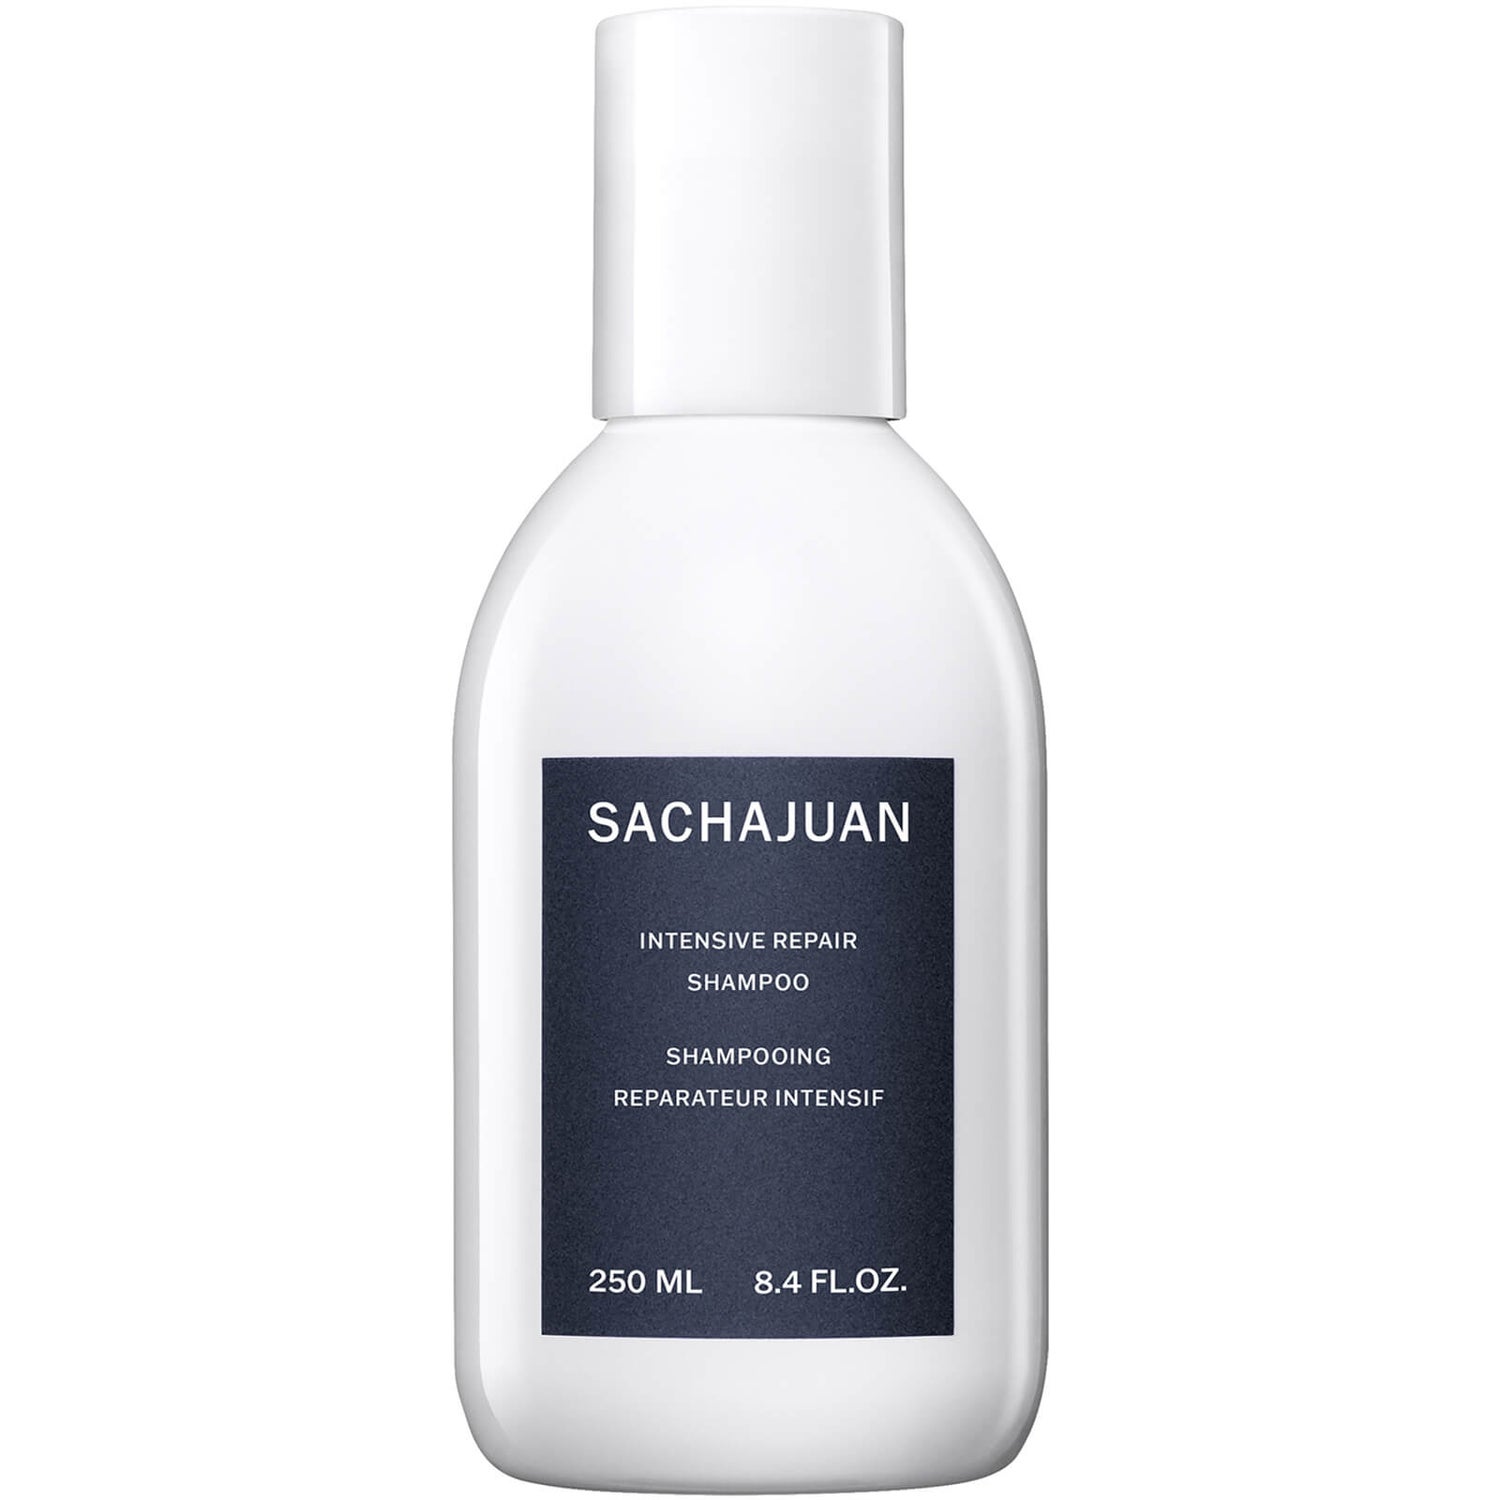 Sachajuan 密集修护洗发水 250ml